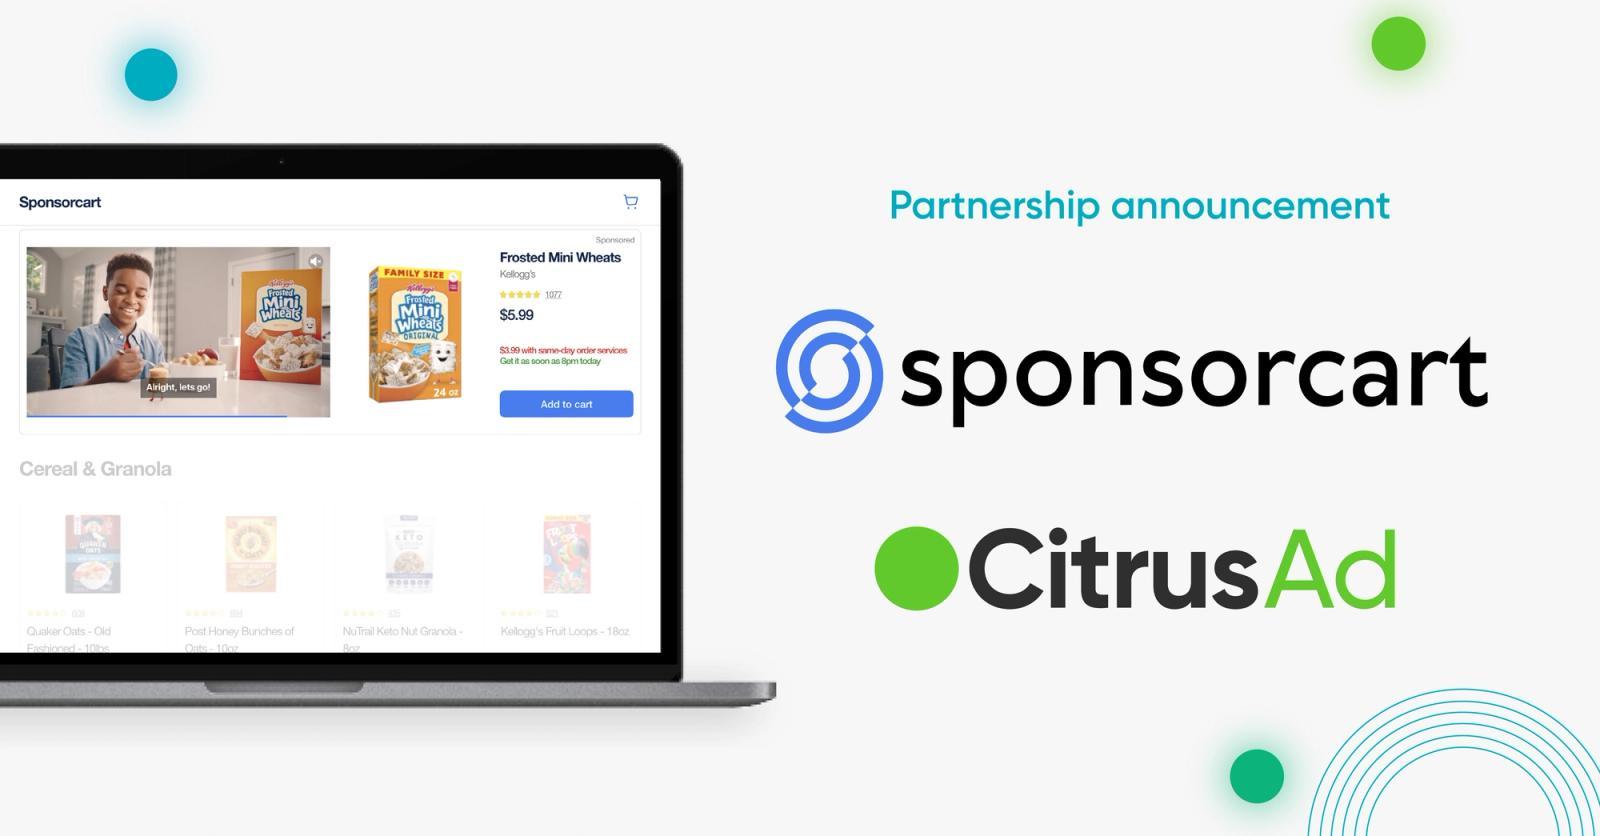 CitrusAd brings Sponsorcart’s shoppable video to retail media